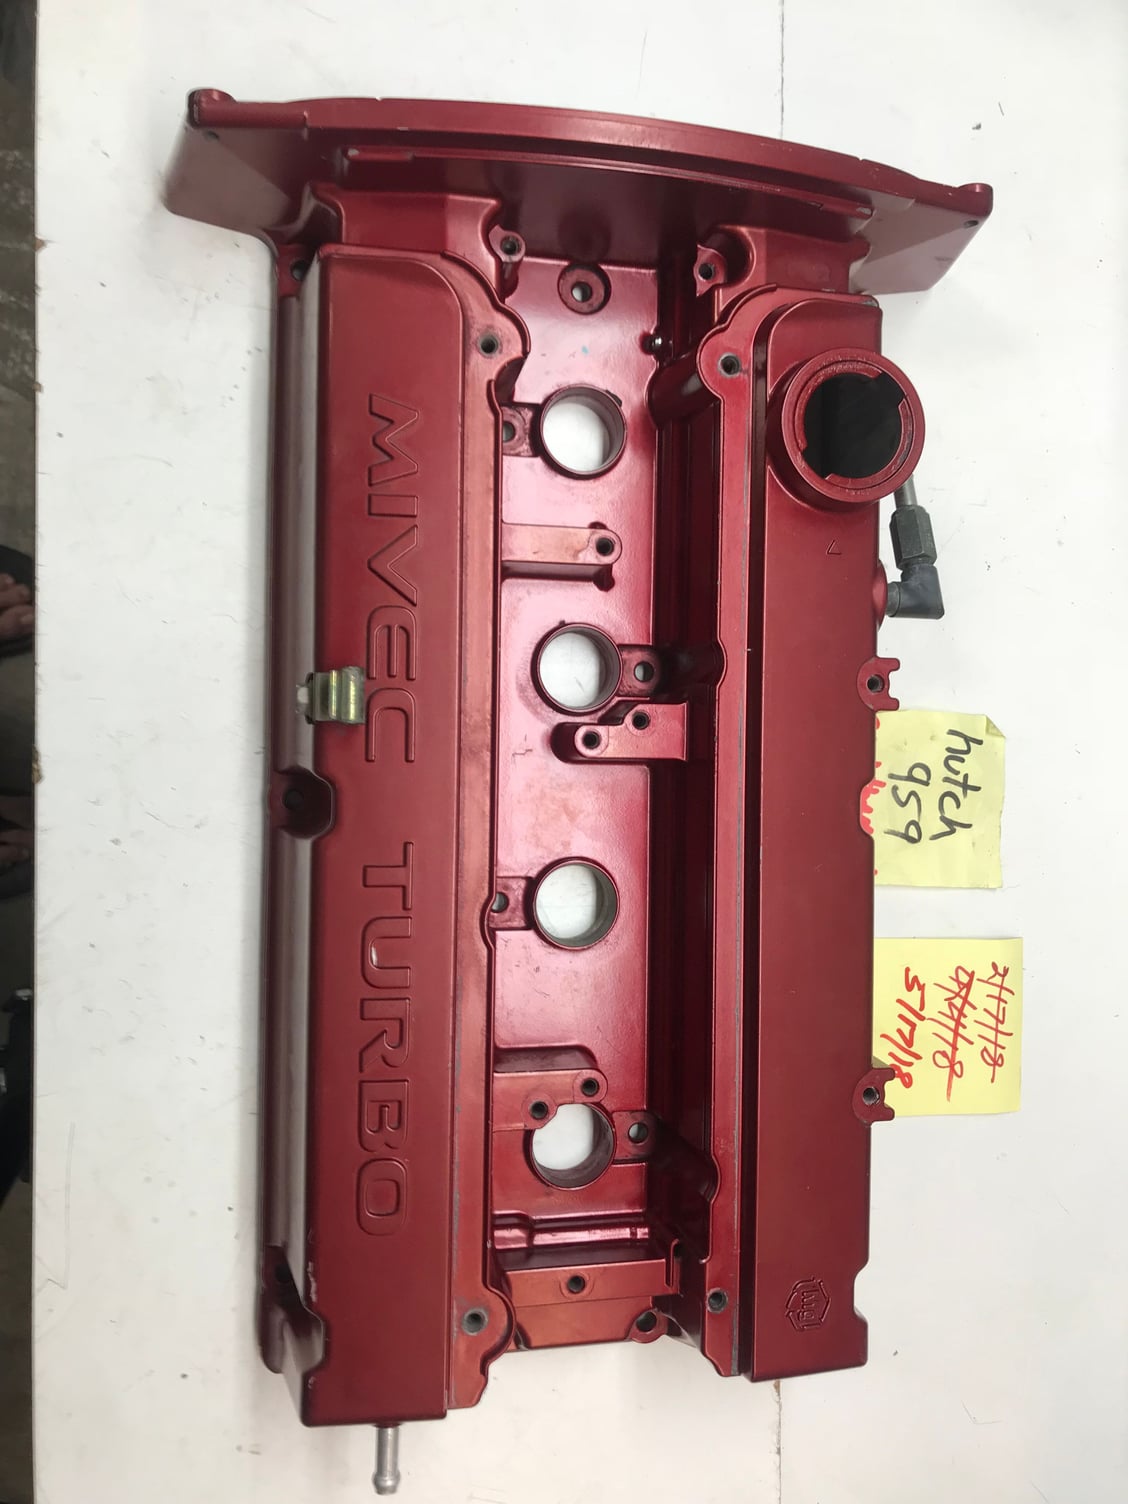 Engine - Intake/Fuel - Evo 9 valve cover - Used - 2006 Mitsubishi Lancer Evolution - Chattanooga, TN 37422, United States